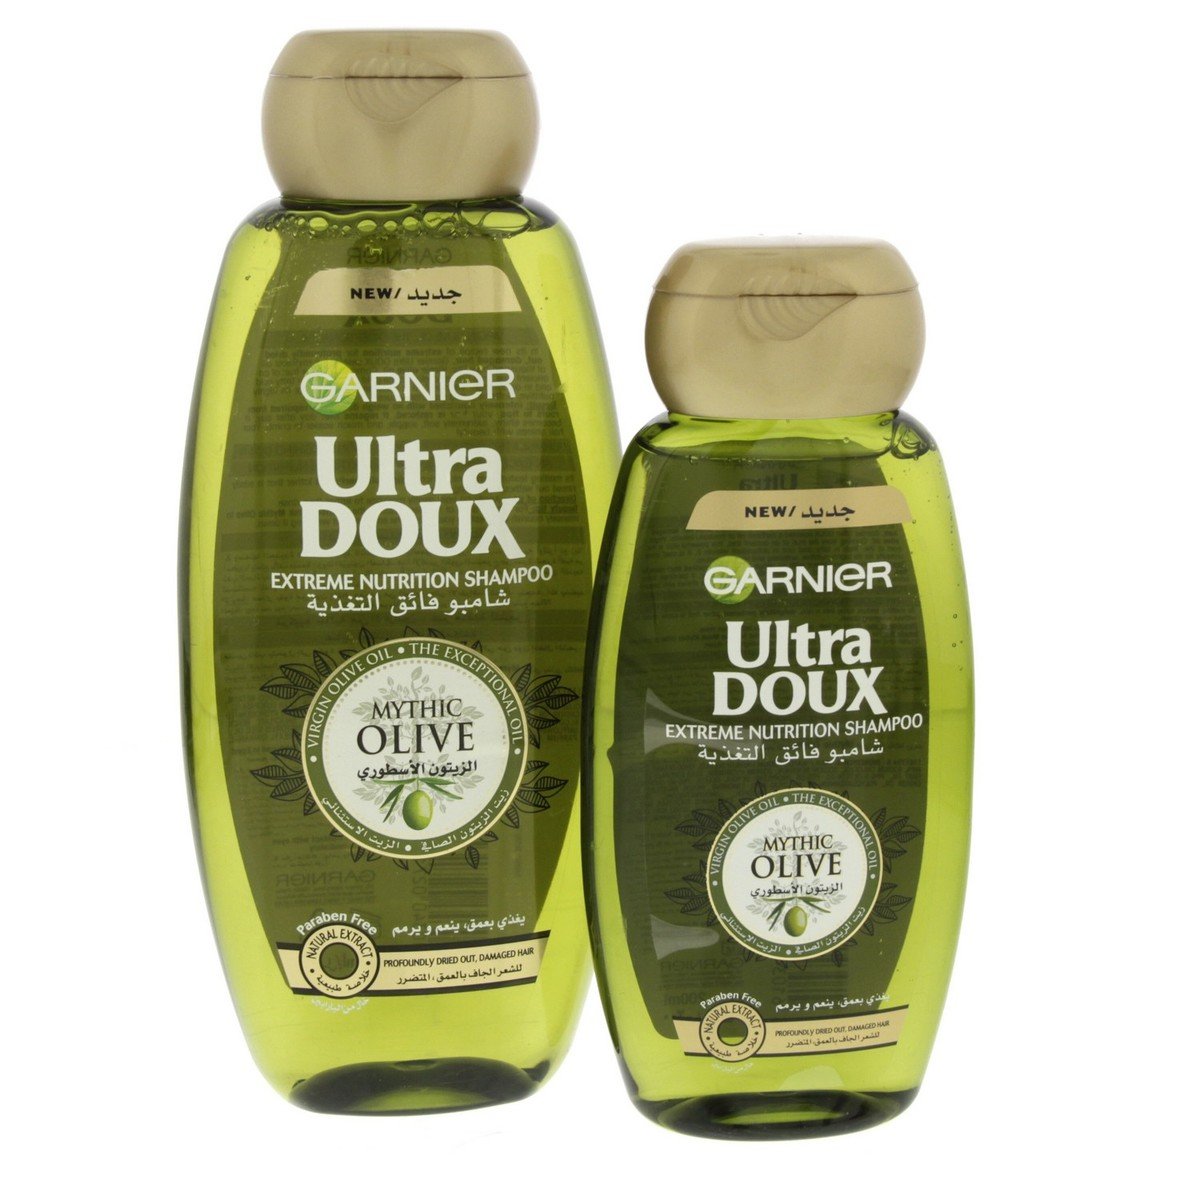 Garnier Ultra Doux  Extreme Nutrition Shampoo Mythic Olive 400ml + 200ml